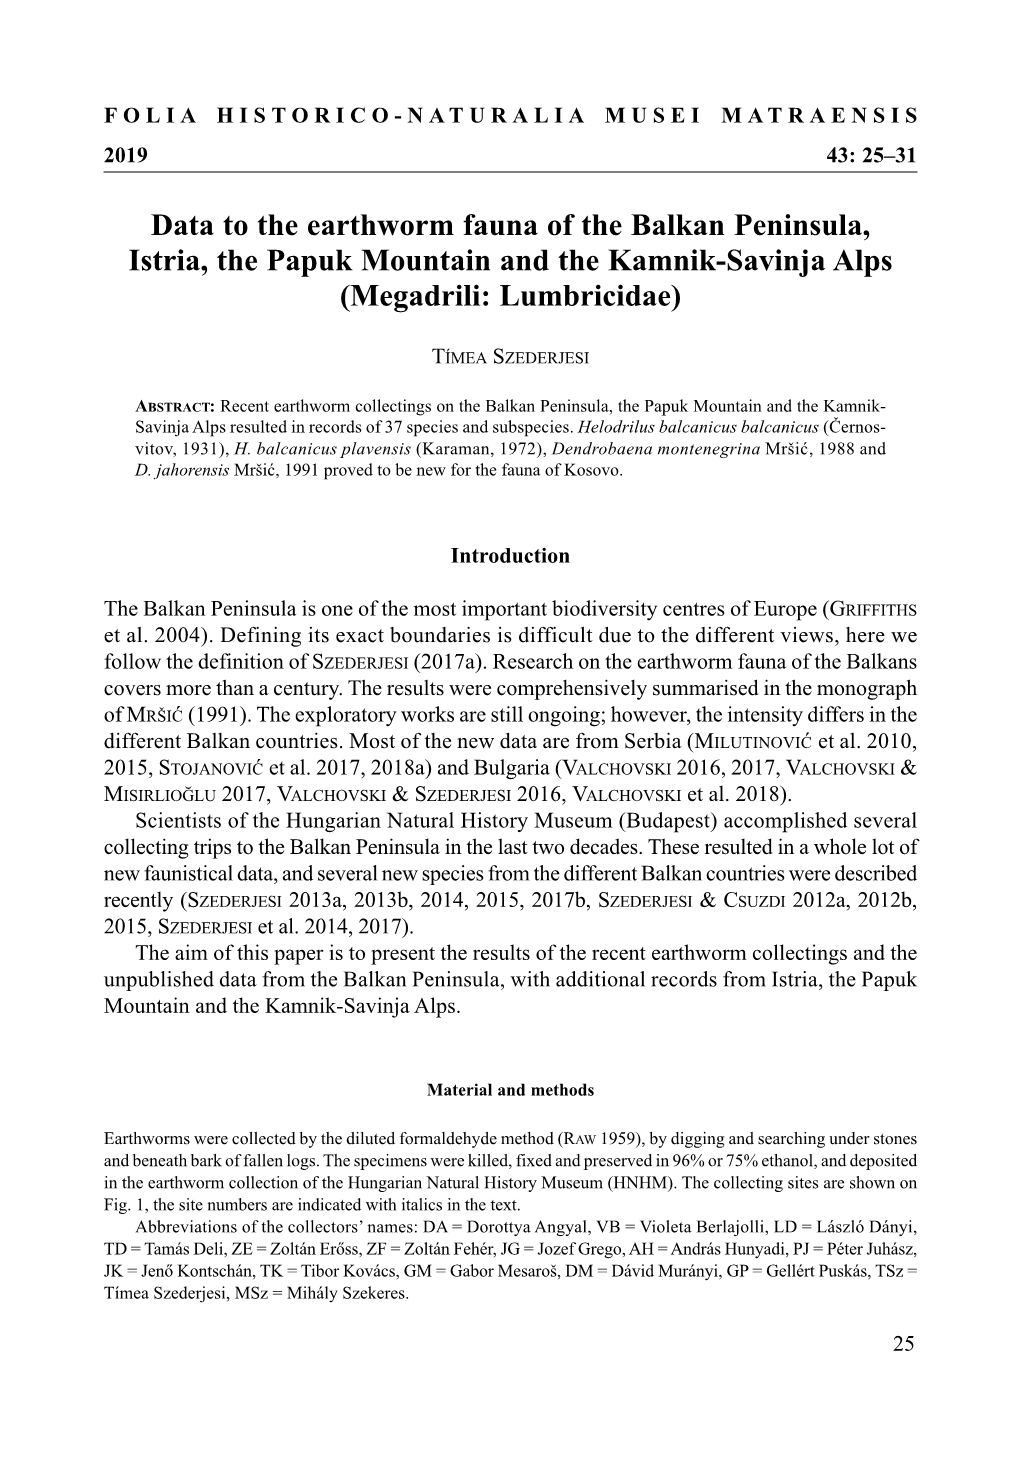 Data to the Earthworm Fauna of the Balkan Peninsula, Istria, the Papuk Mountain and the Kamnik-Savinja Alps (Megadrili: Lumbricidae)